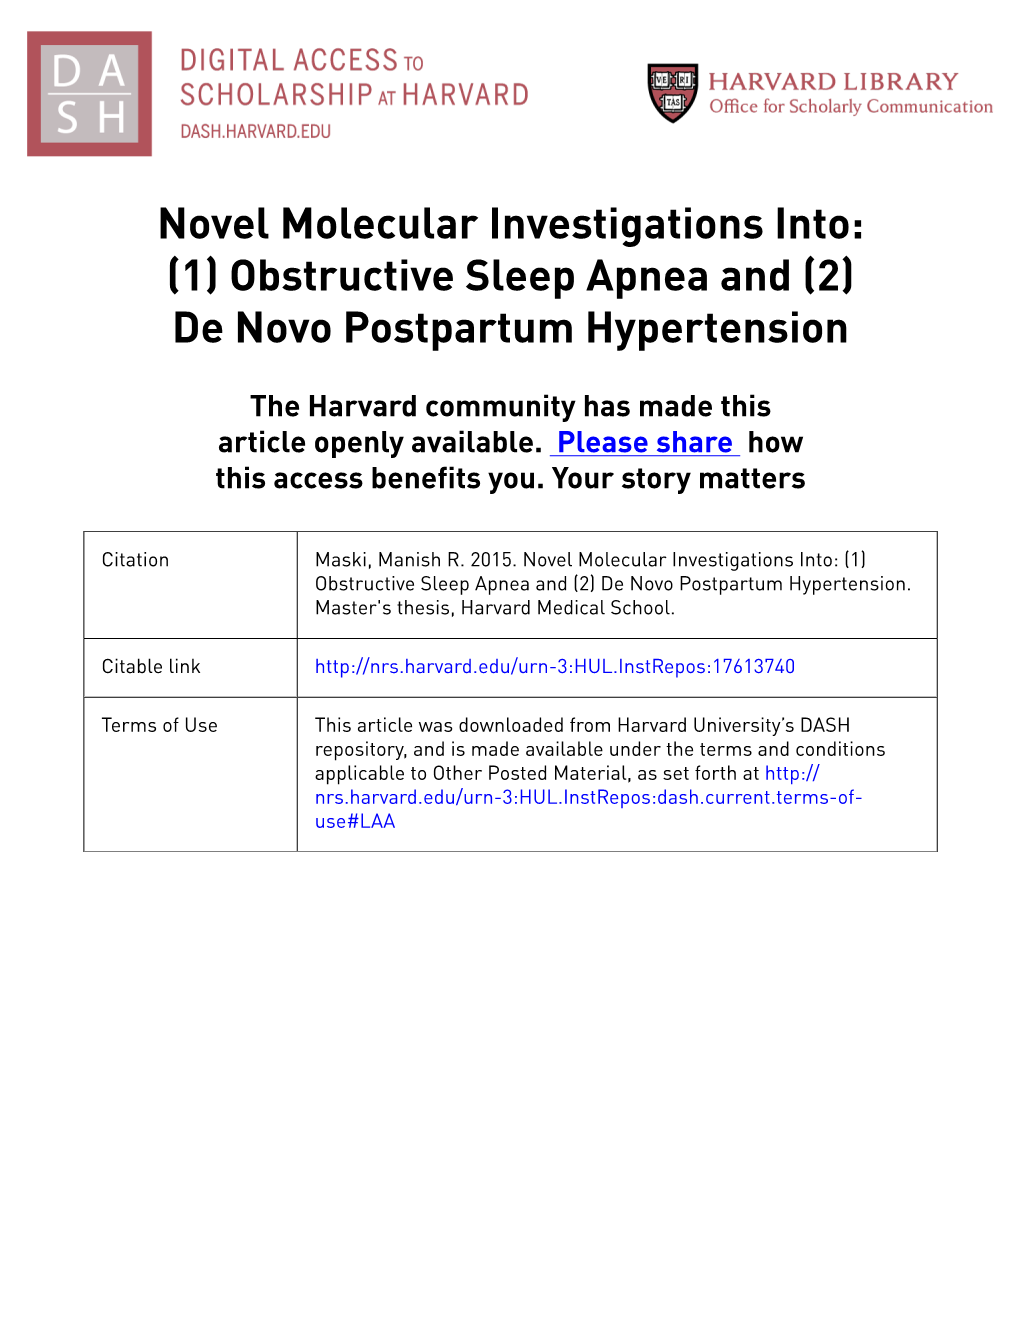 Novel Molecular Investigations Into: (1) Obstructive Sleep Apnea and (2) De Novo Postpartum Hypertension